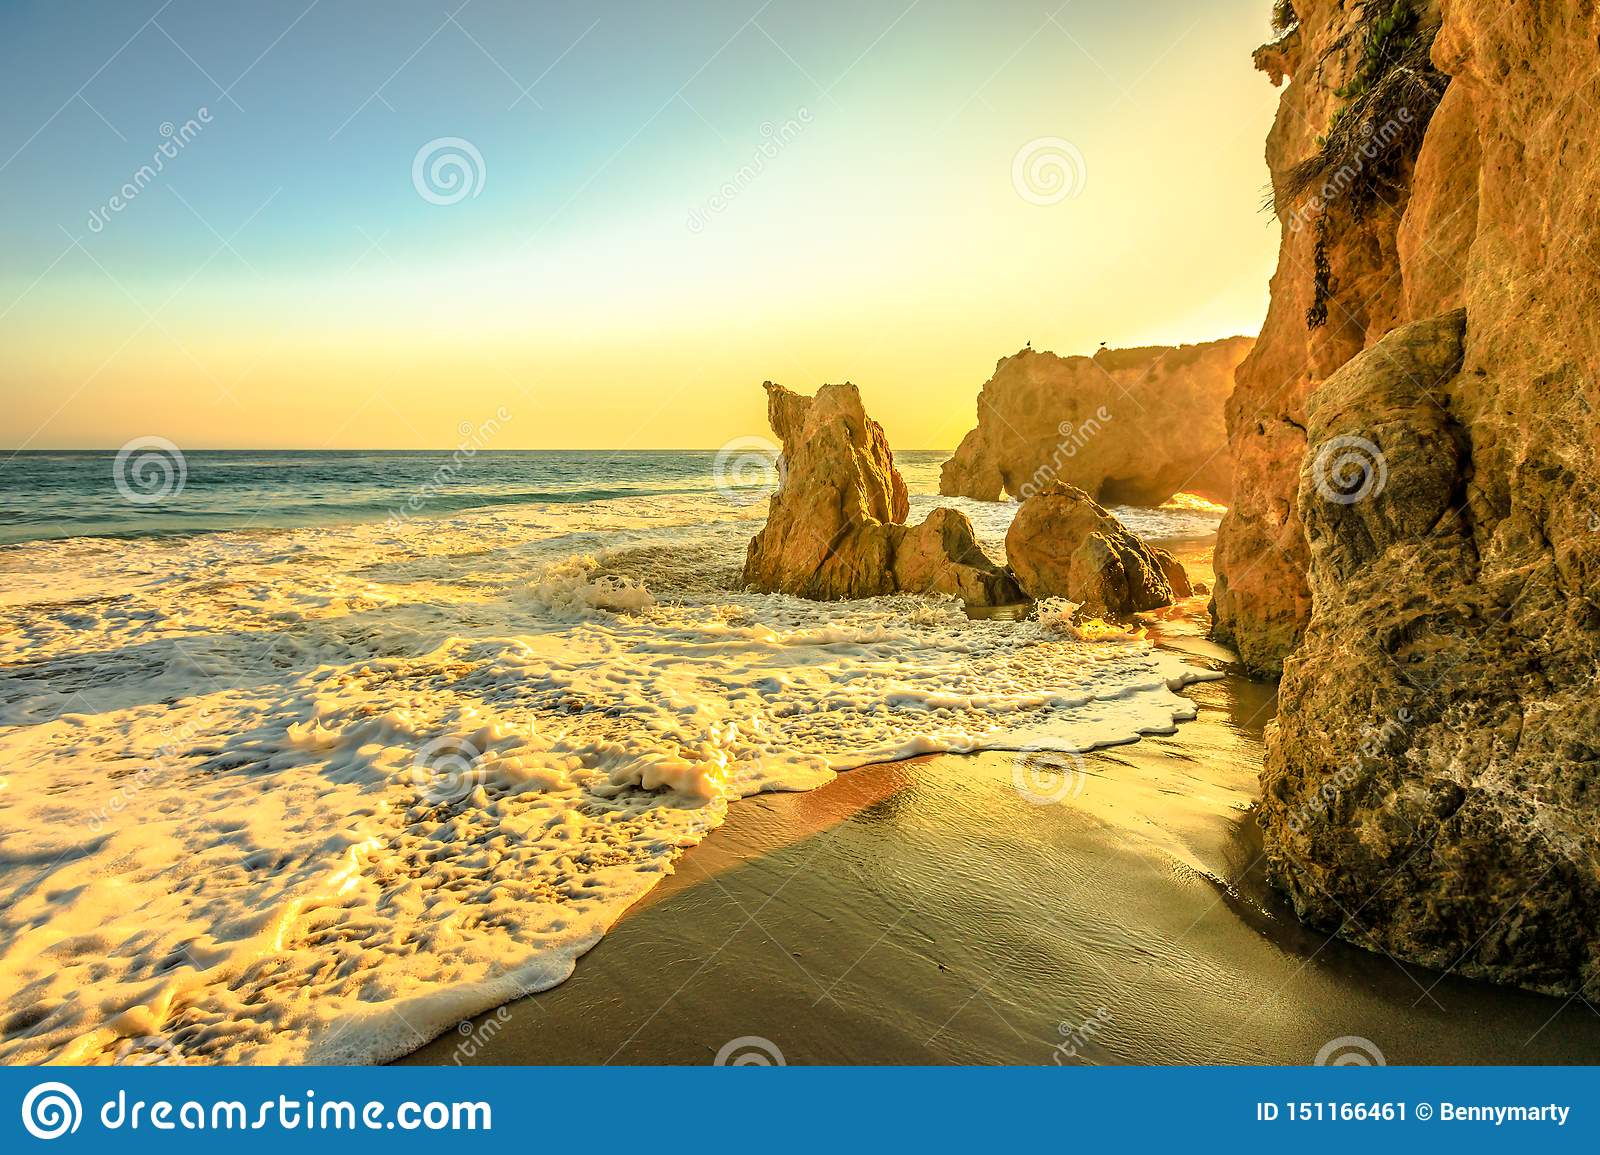 California sunset beach background stock image